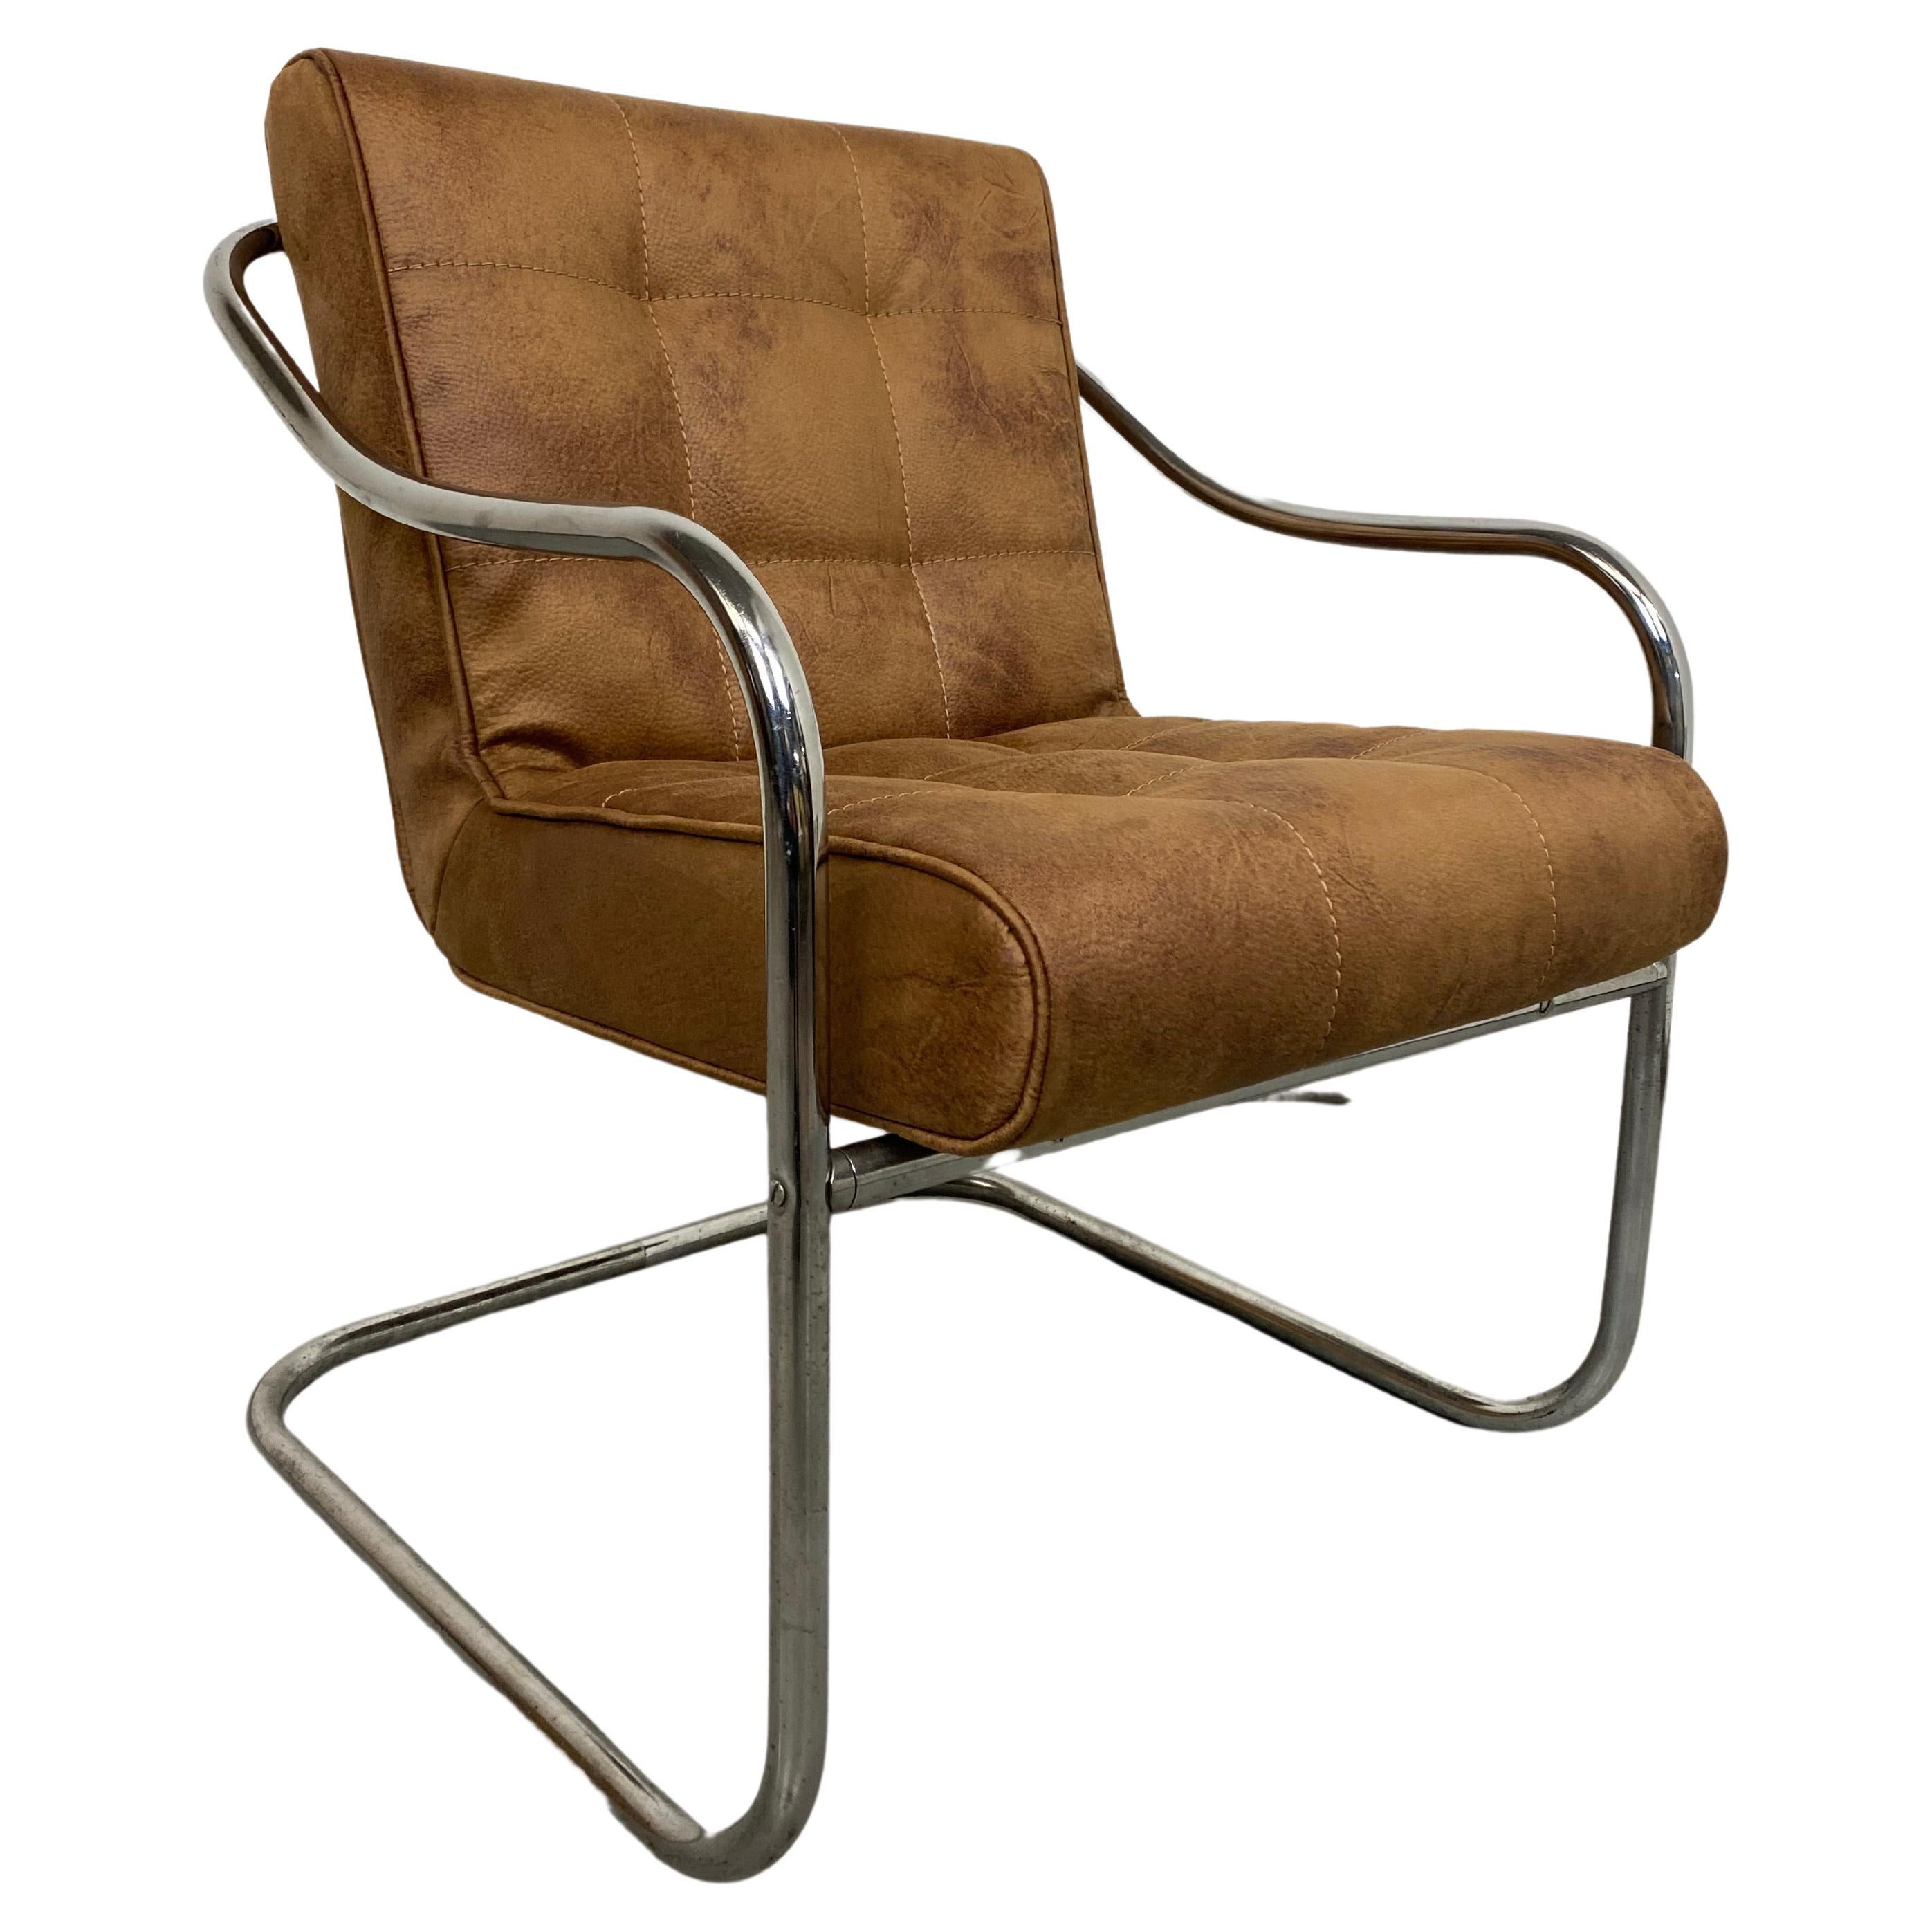 Tubular Steel Lounge Chair